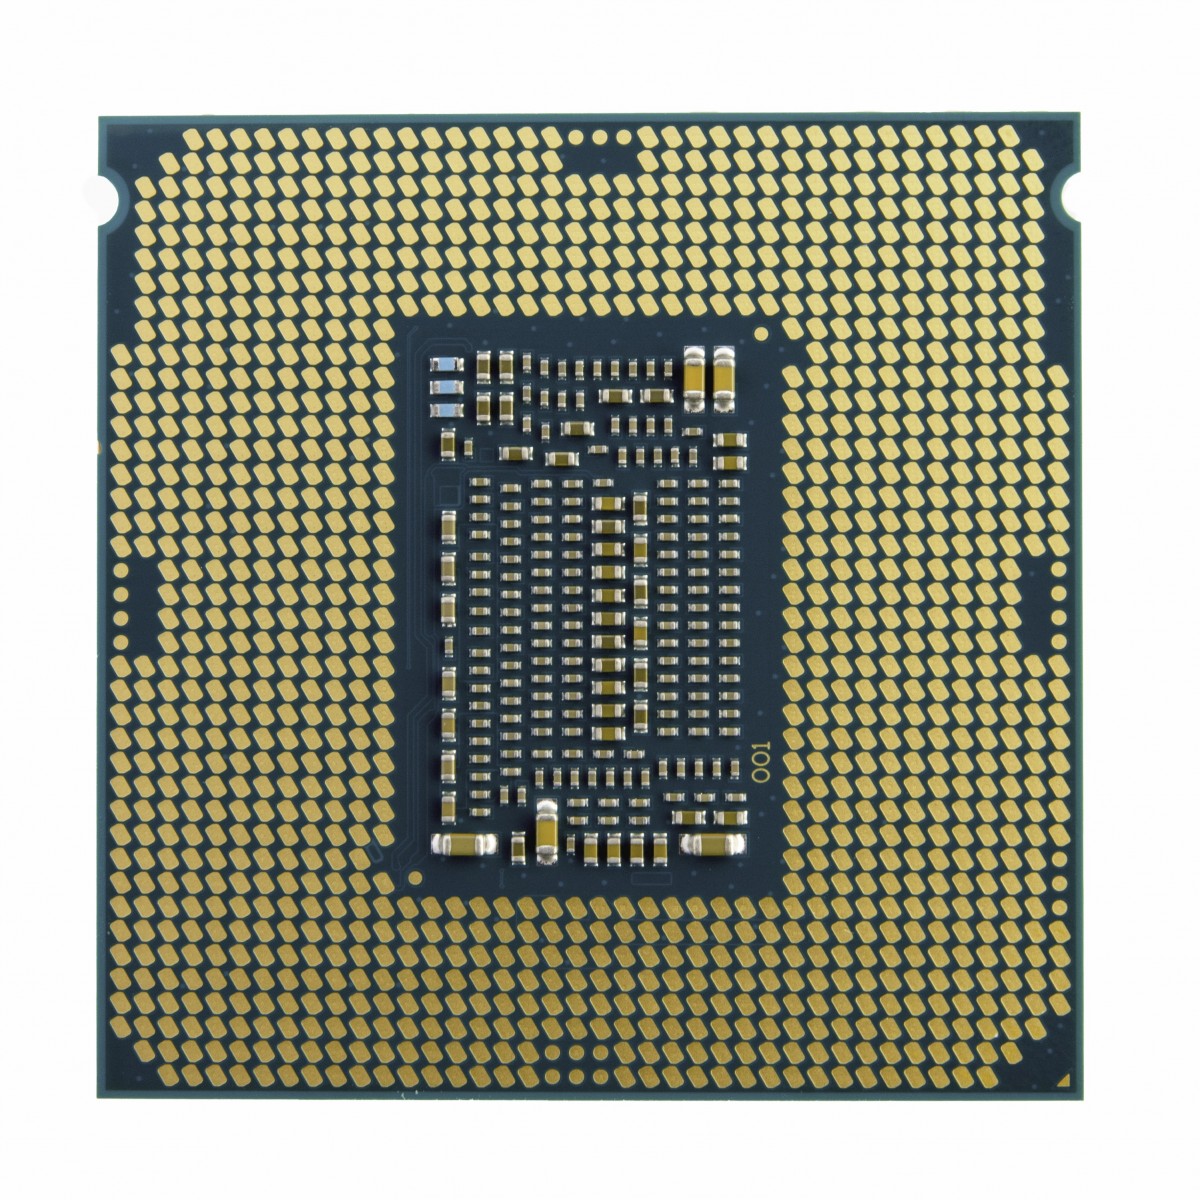 Intel® Core™ i3-10105 Processor